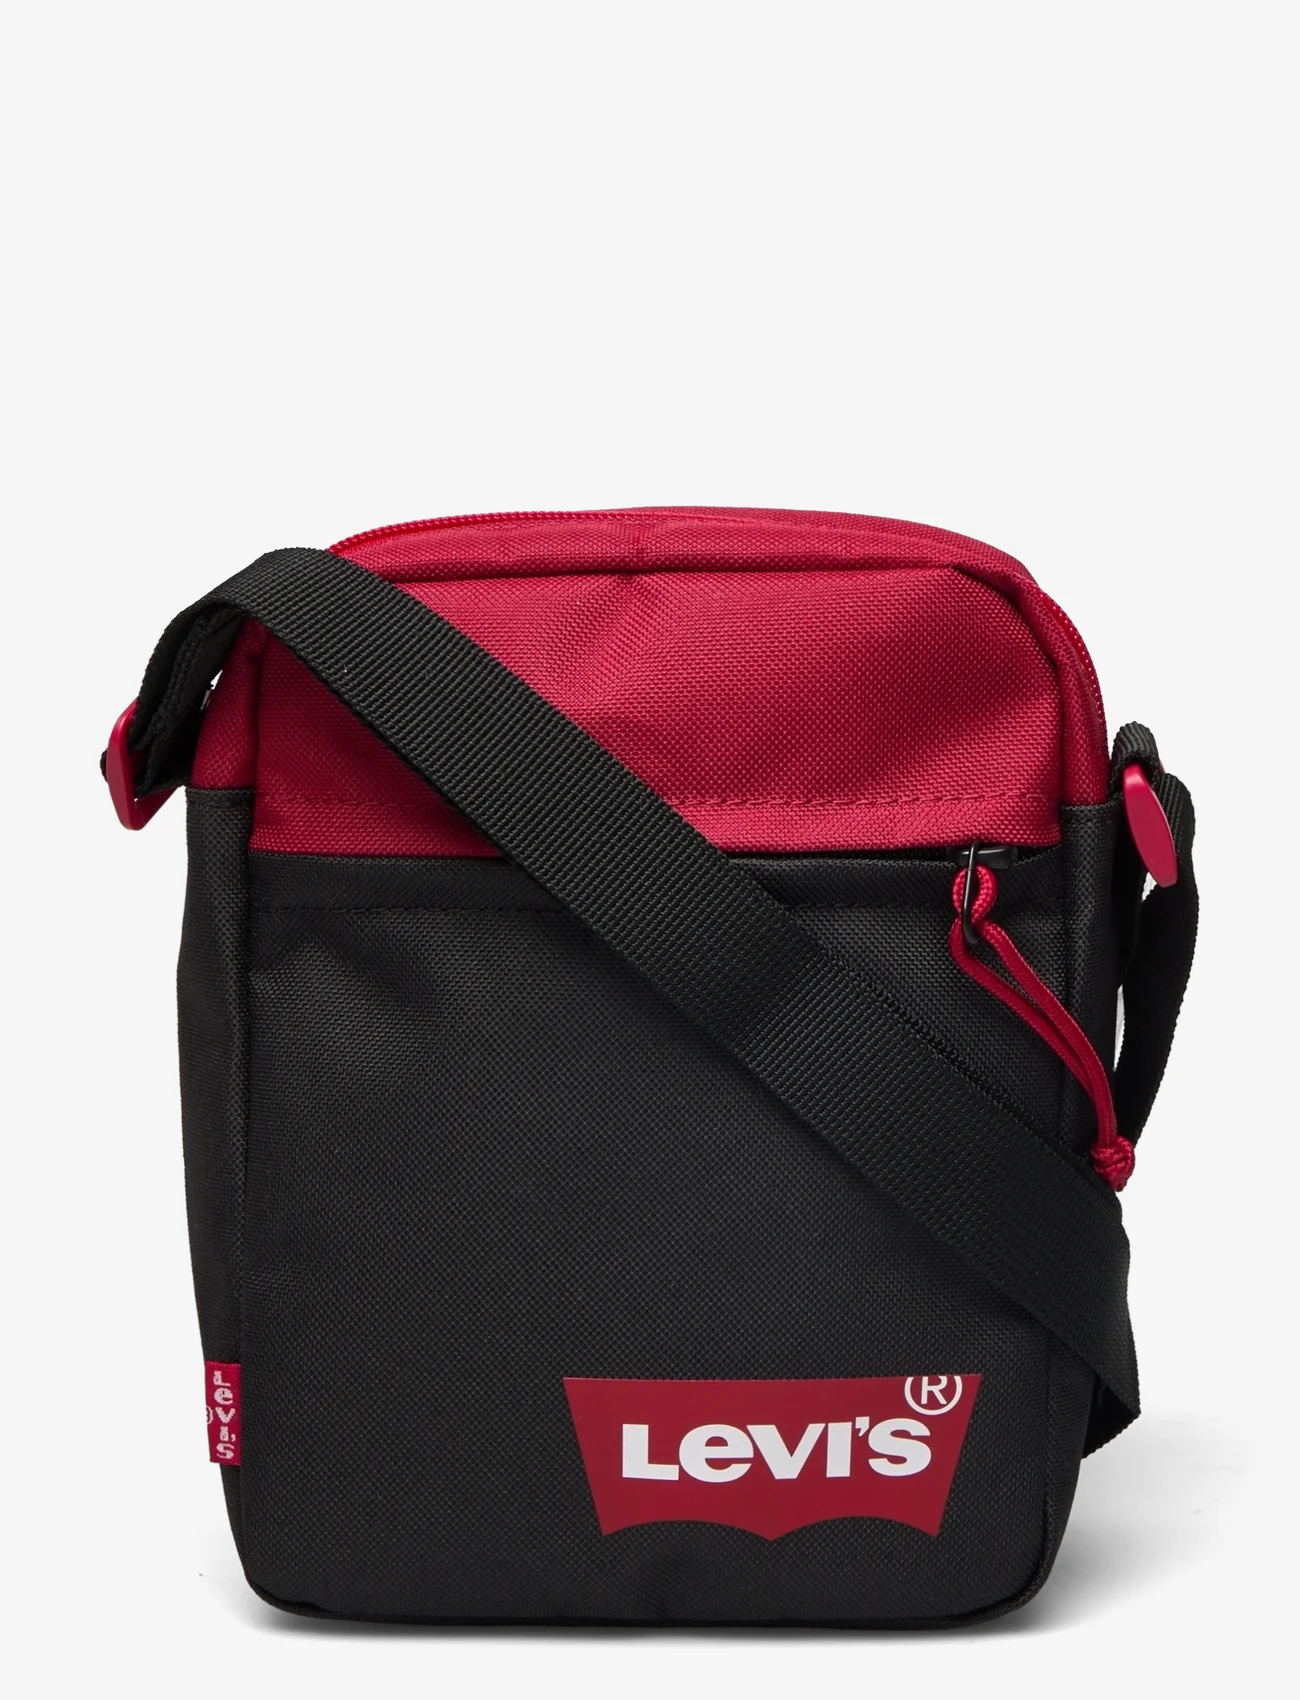 Levi’s Footwear & Acc - MINI CROSSBODY SOLID (RED BATWING) - regular red - 0